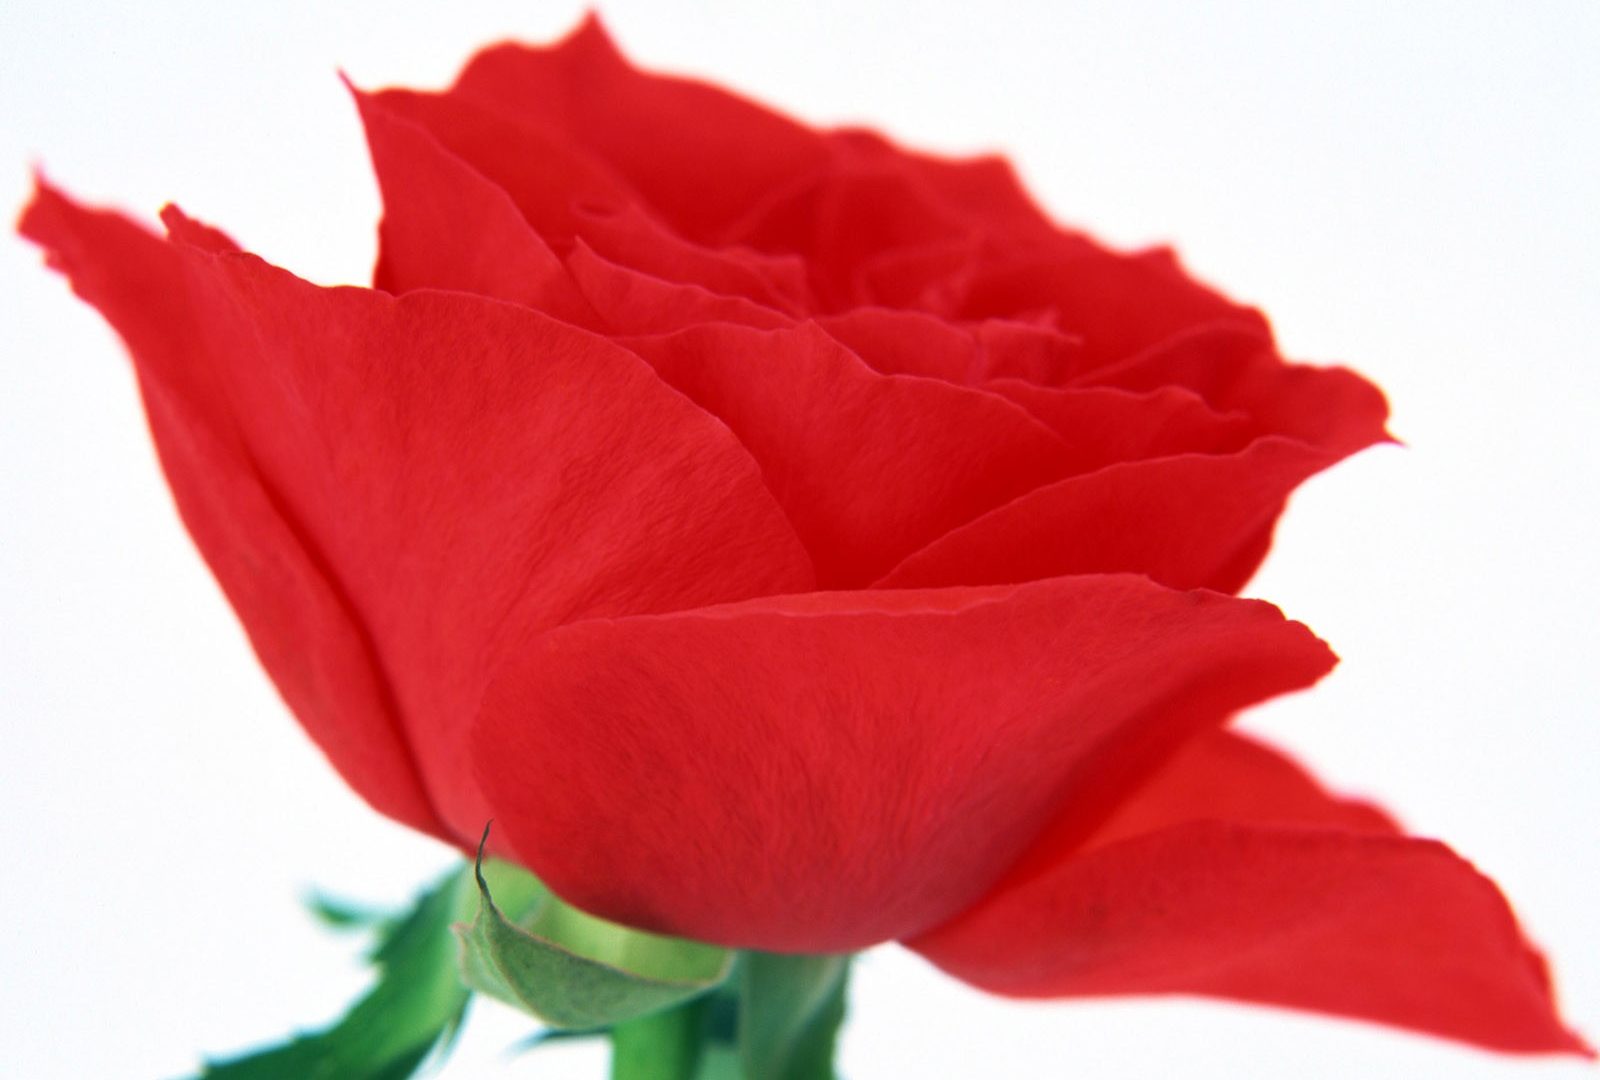 Flowers: Red Rose Flowers Blooms Petals Desktop Background Images ...